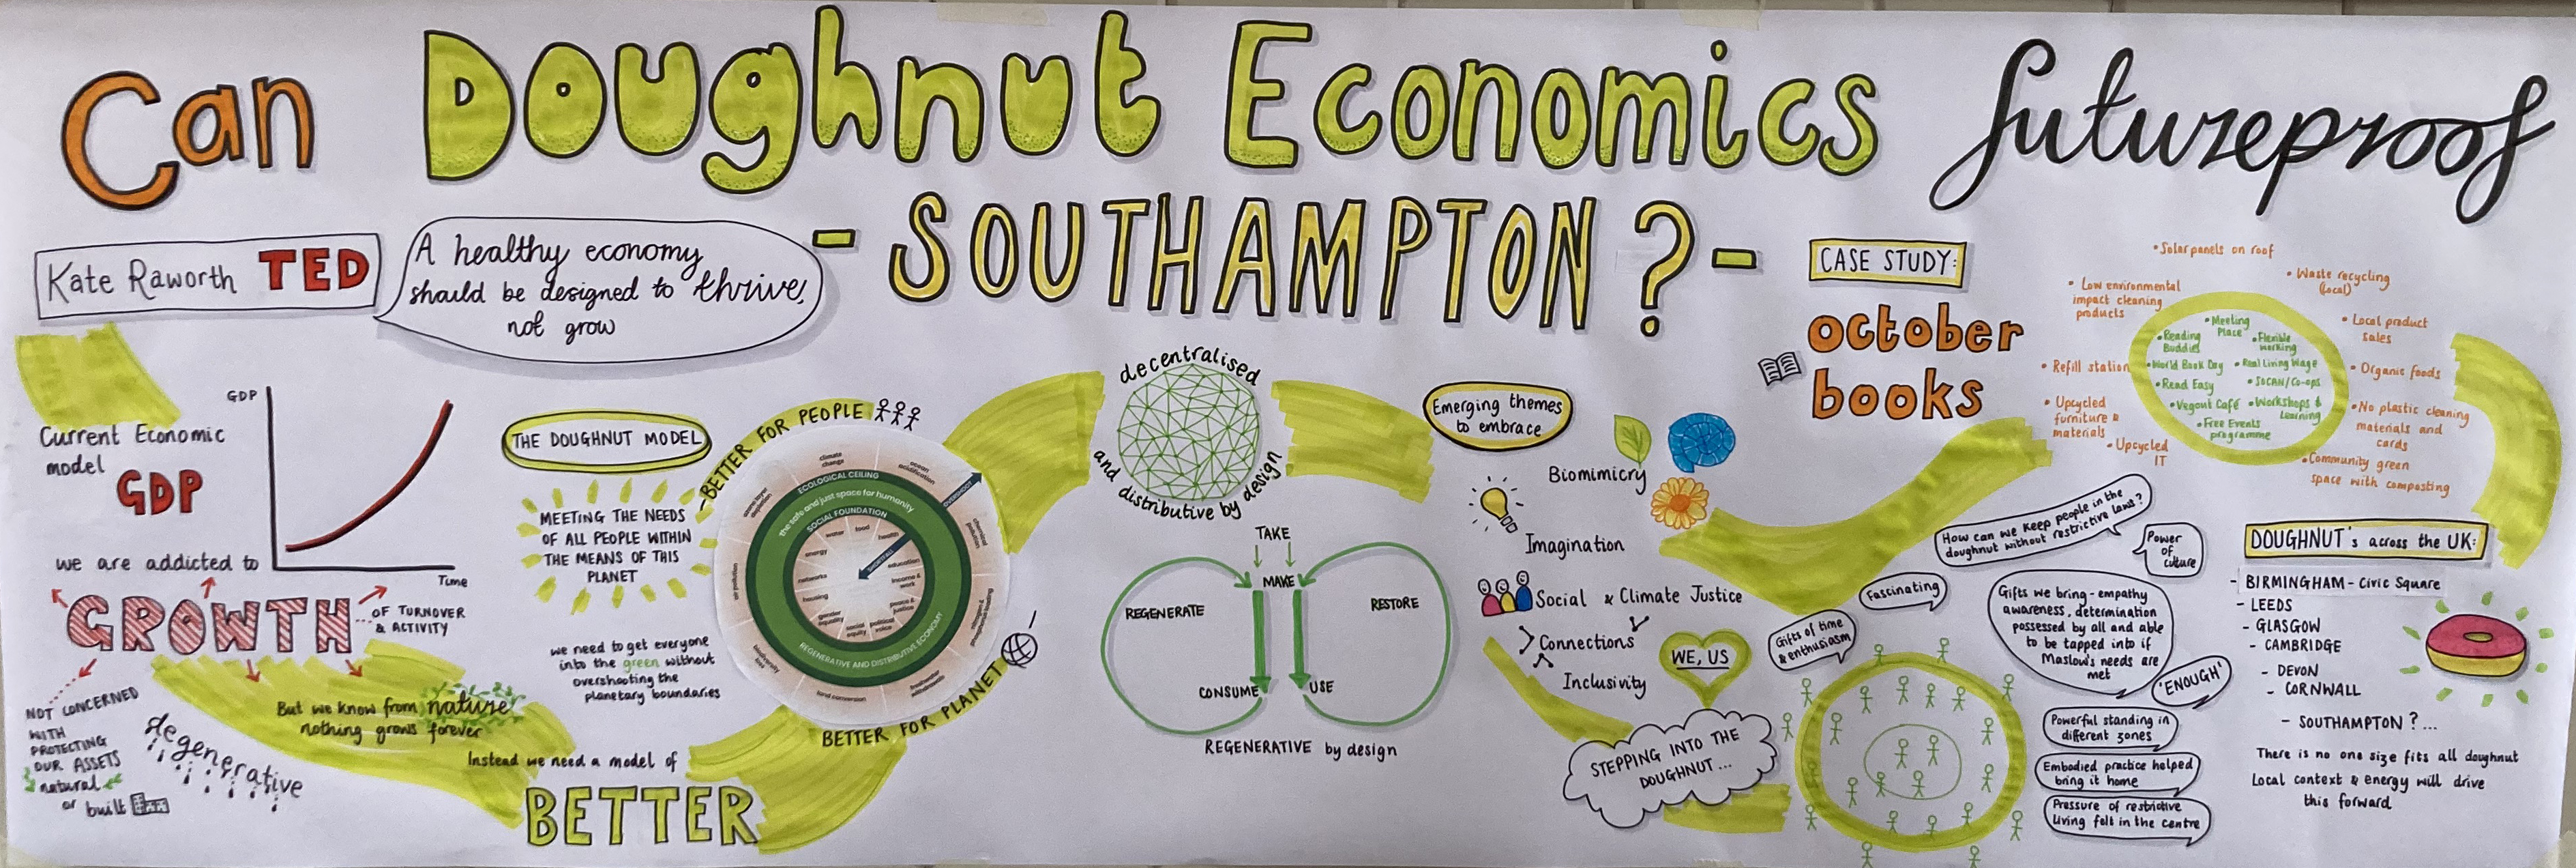 Info-graphic_Doughnut_Economics_by_Tammy_Oliver.jpg